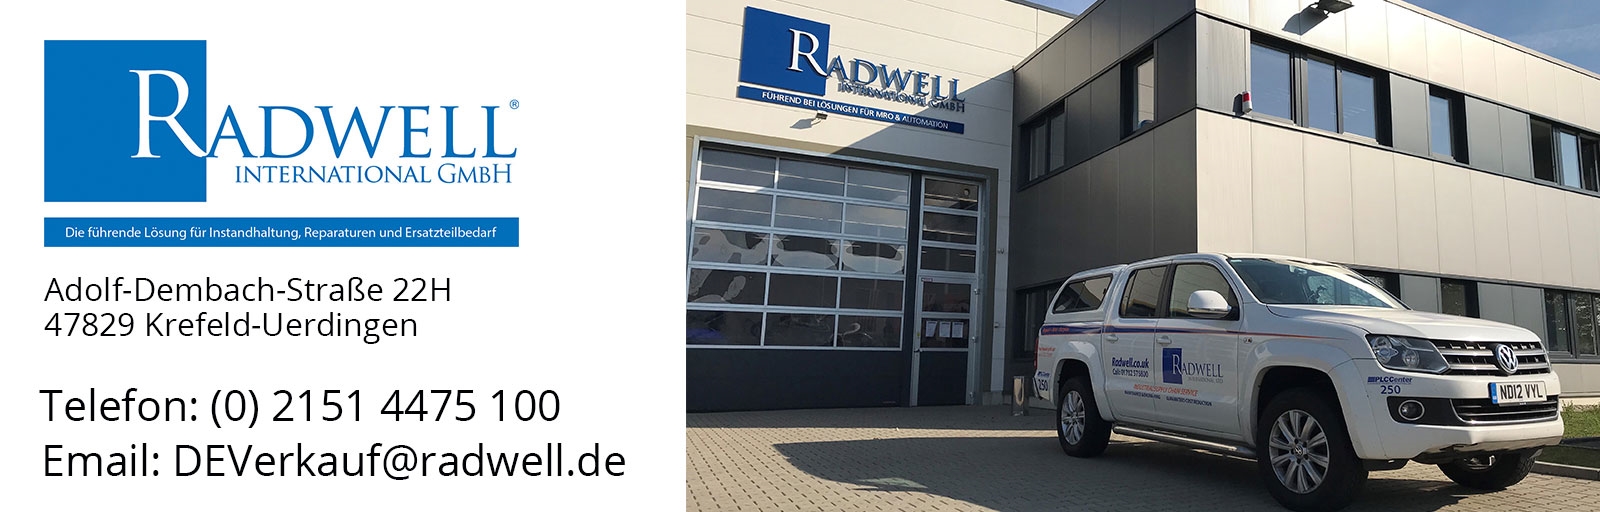 Radwell-International-Germany-GmbH-Krefeld